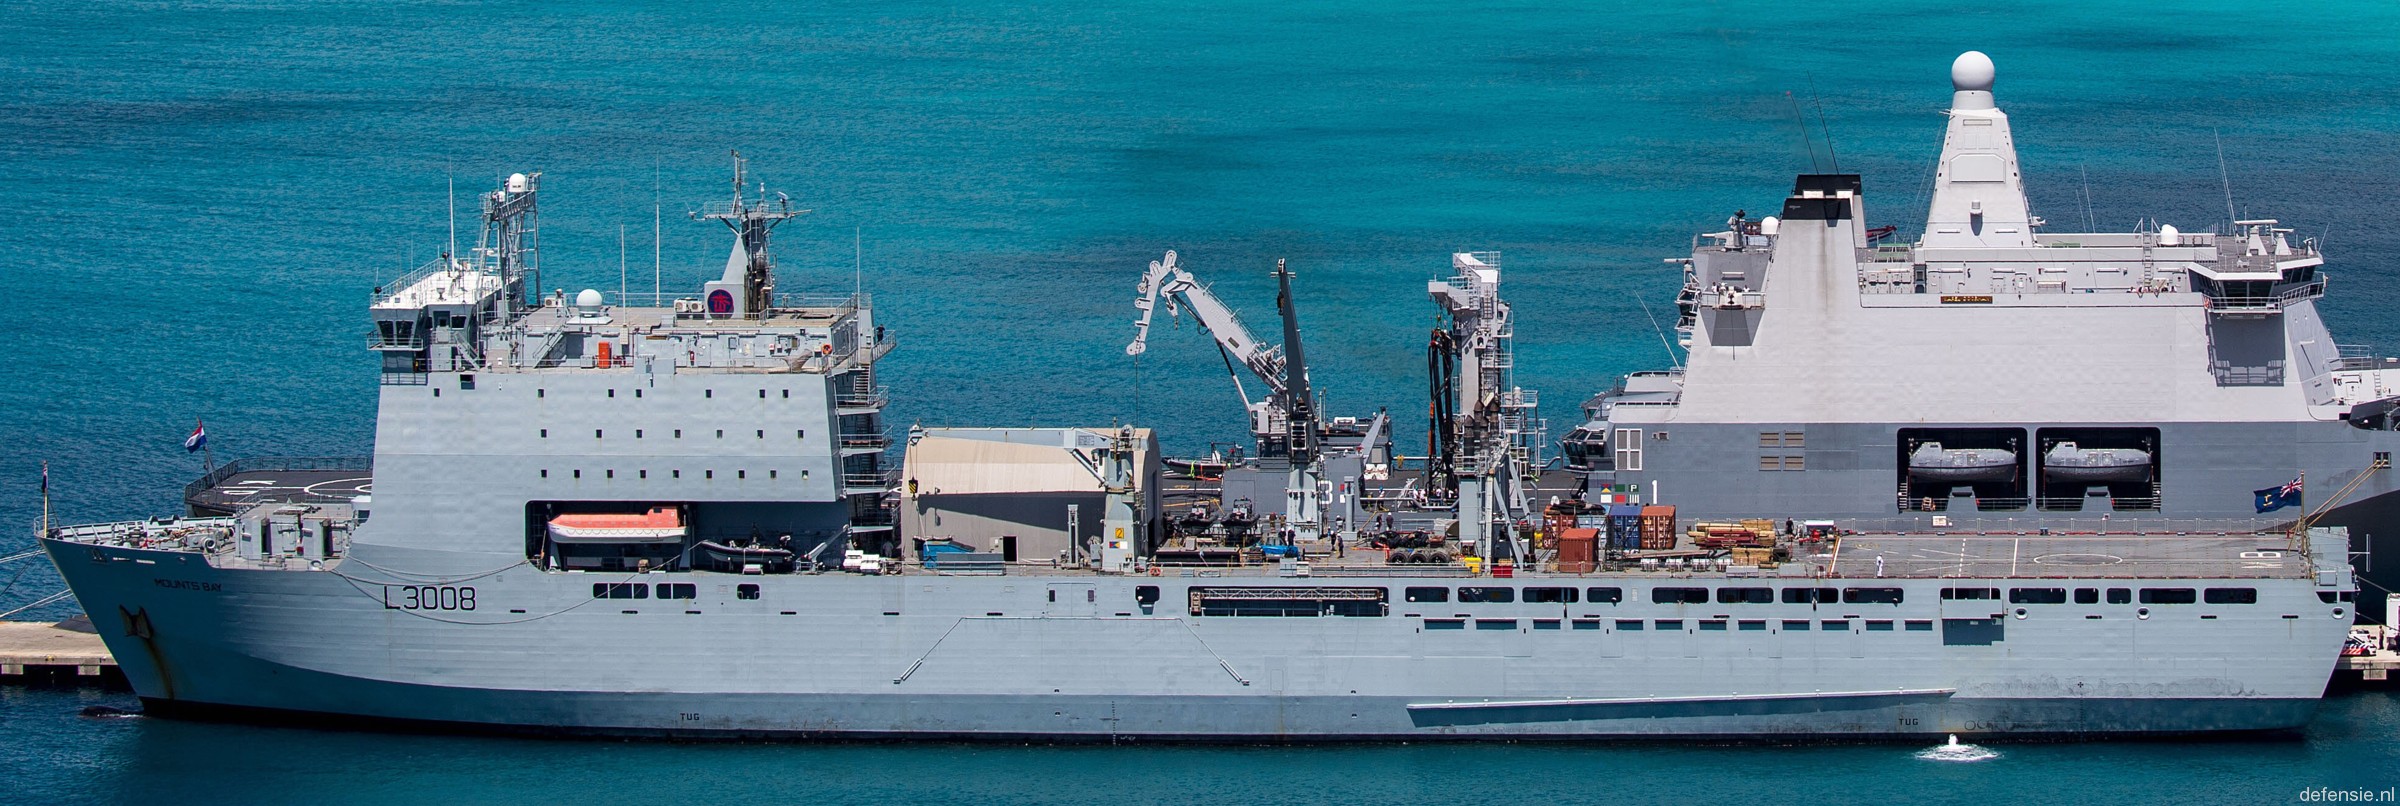 l-3008 rfa mounts bay dock landing ship lsd royal fleet auxilary navy 36